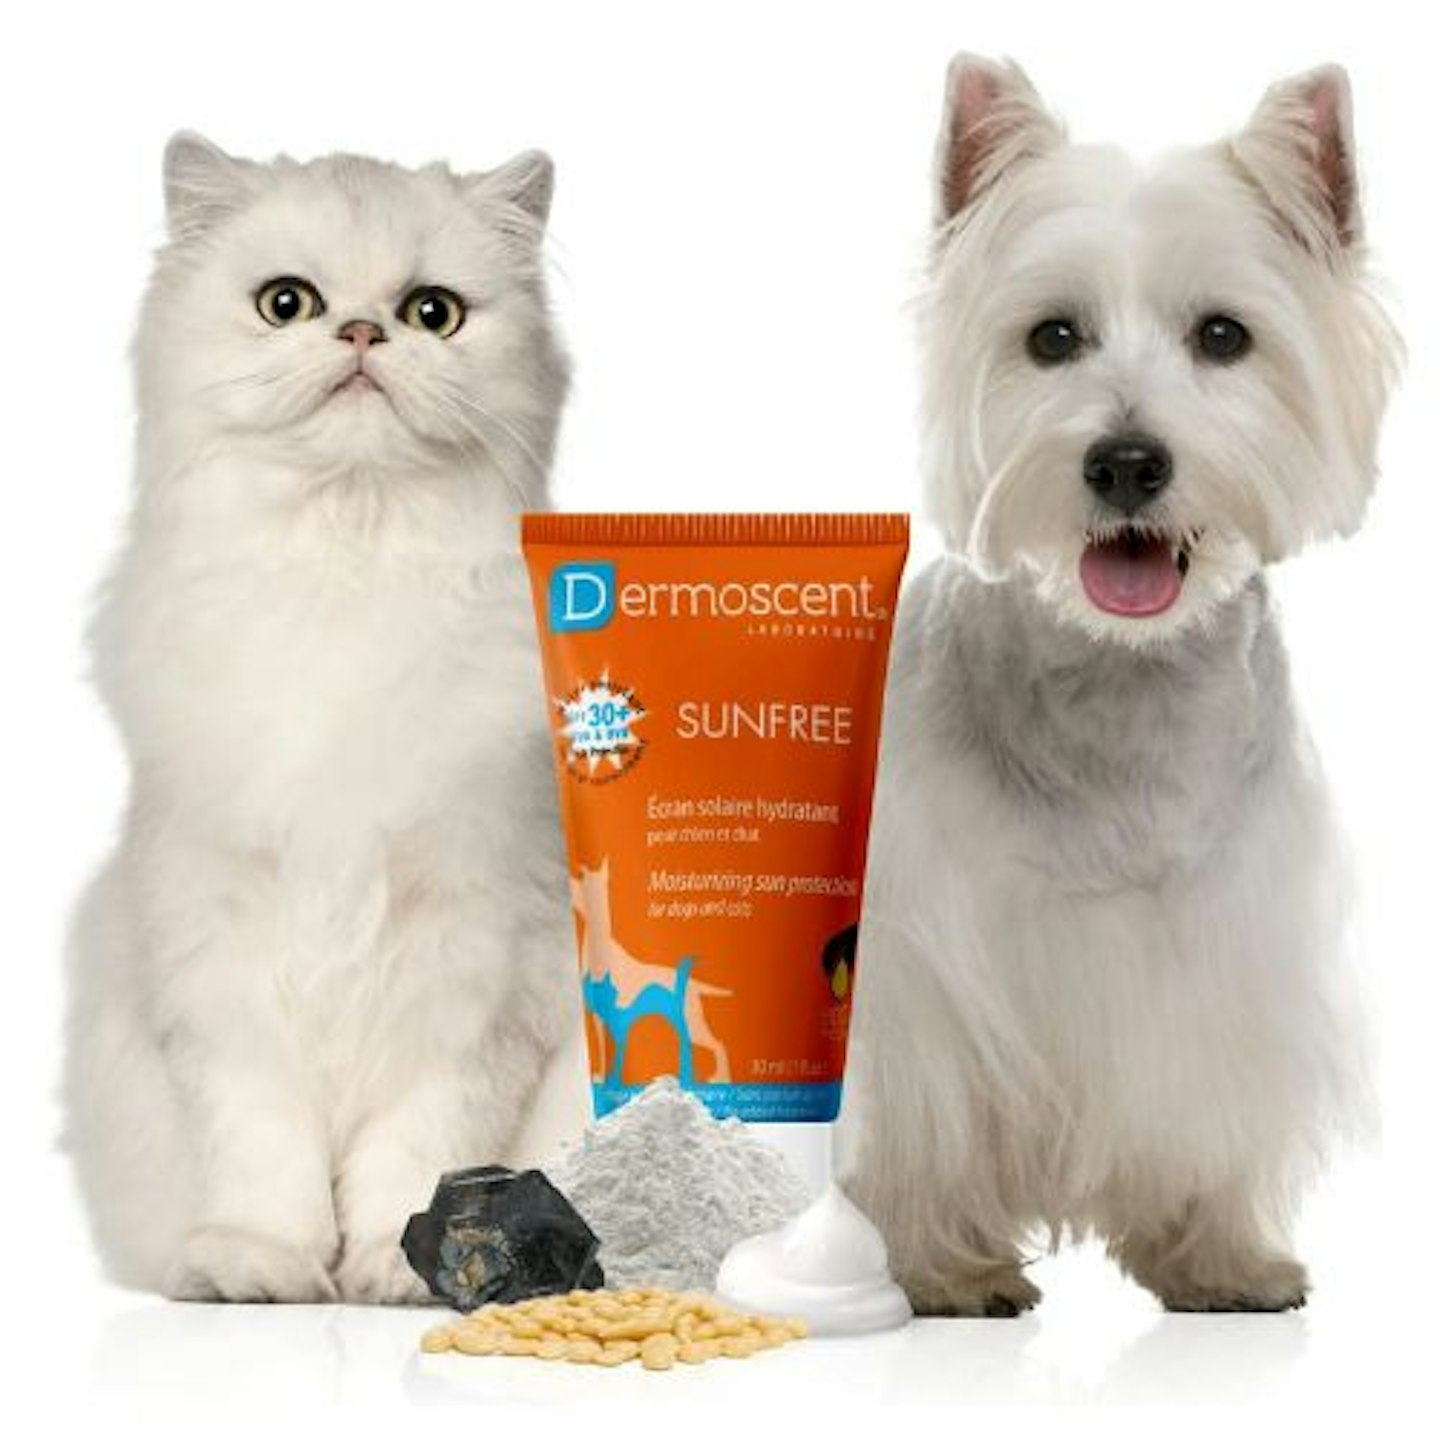 Dermoscent SunFREE SPF30+ Cat & Dog Sunscreen